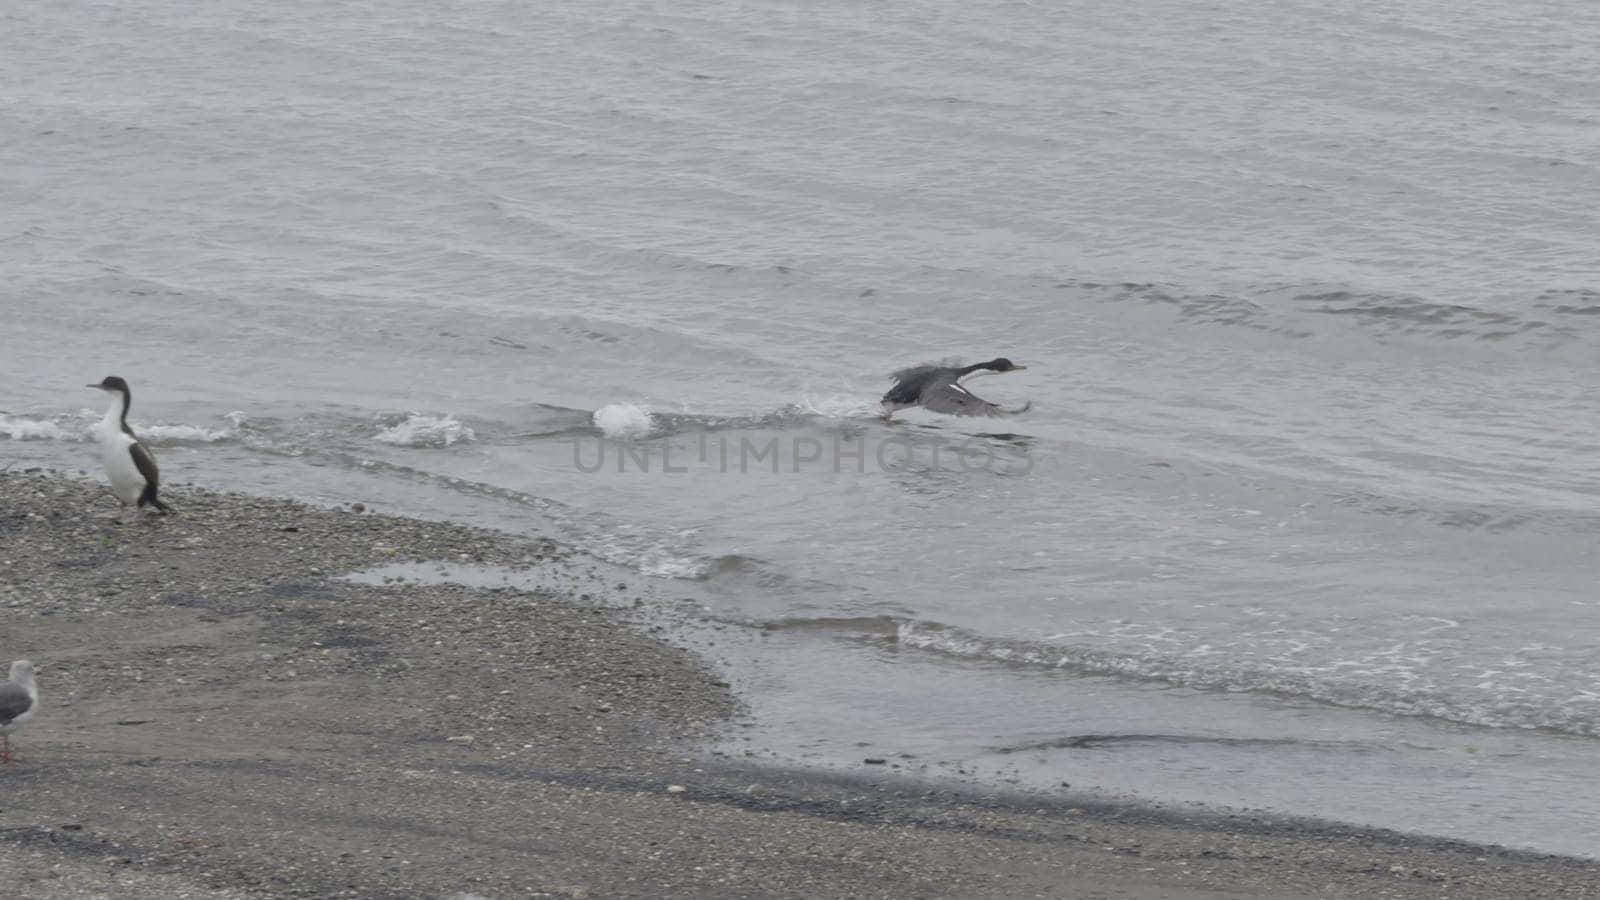 Emperor cormorant takes flight from sandy shore in slow-motion elegance.